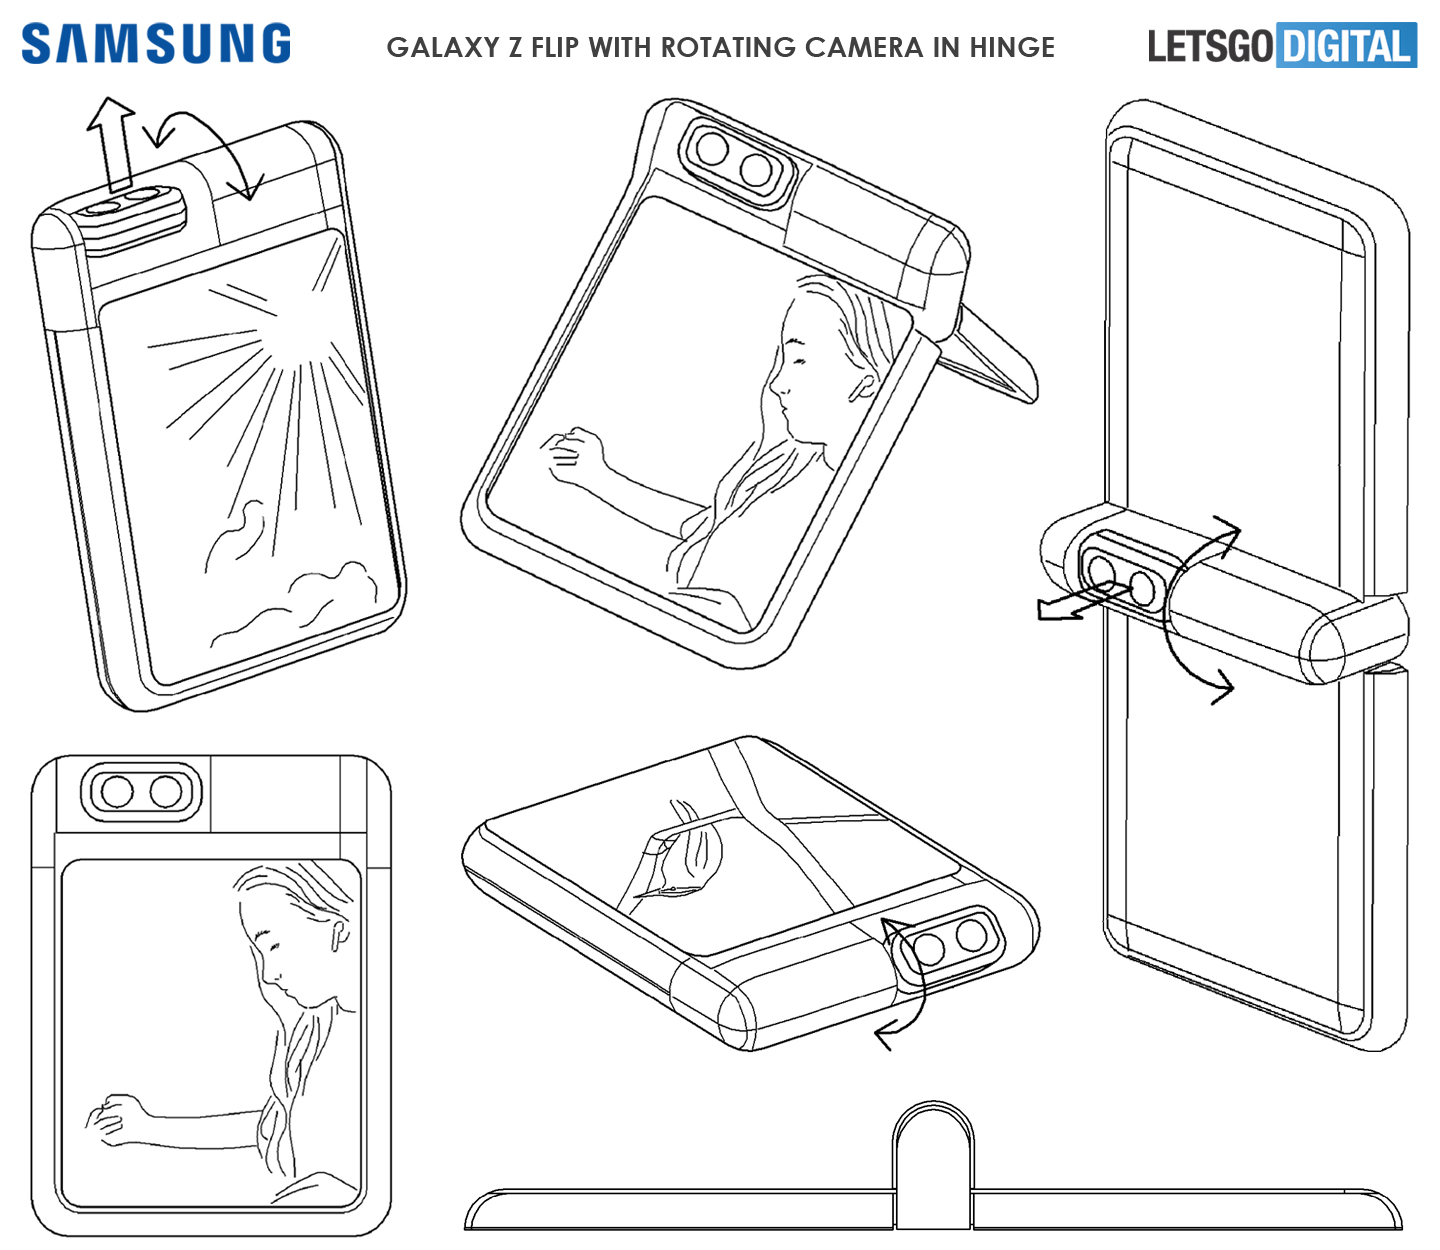 Samsung could incorporate a pivoting camera pivot in a future Galaxy Z Flip